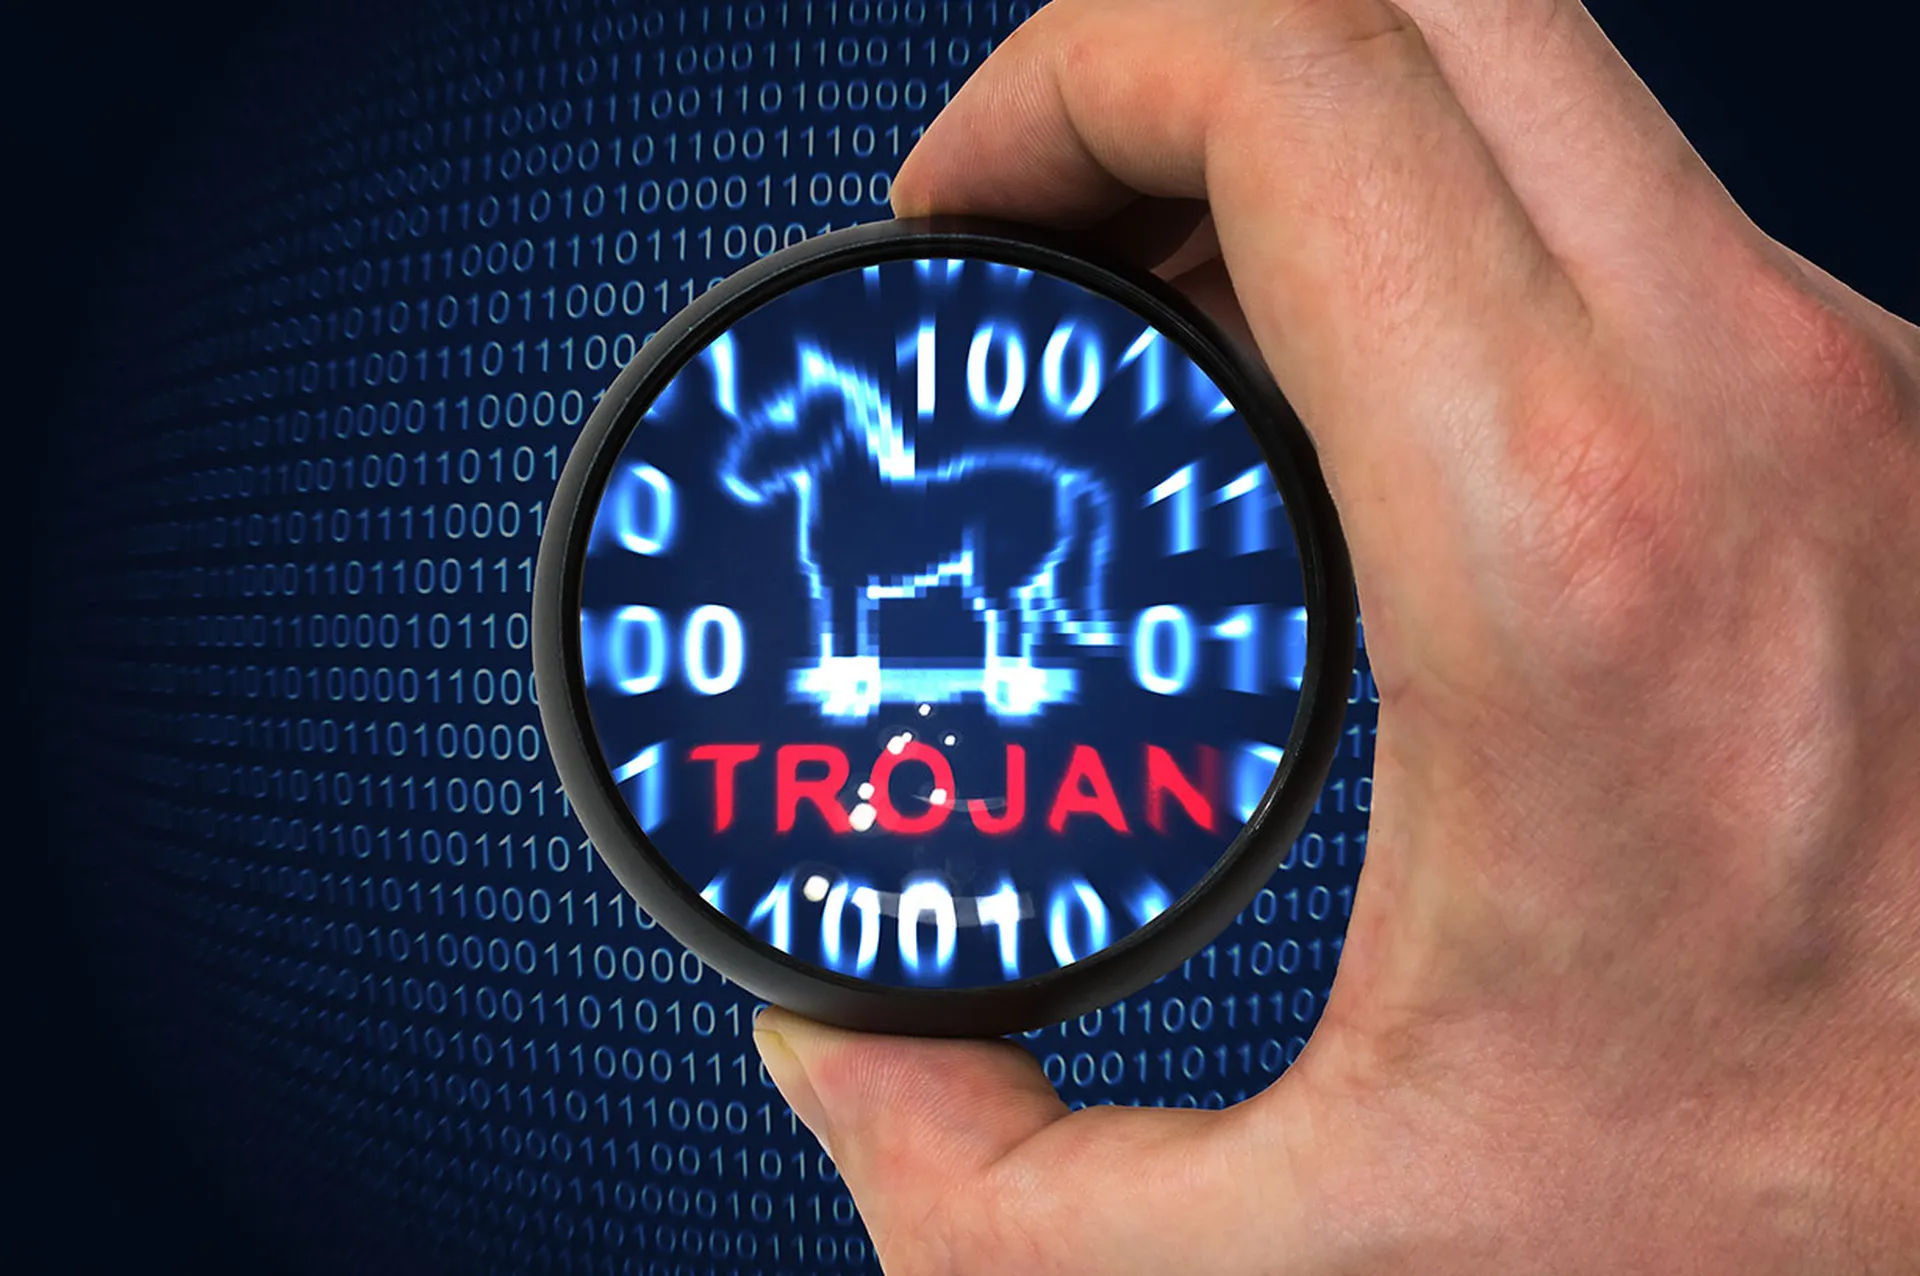 Trojan malware